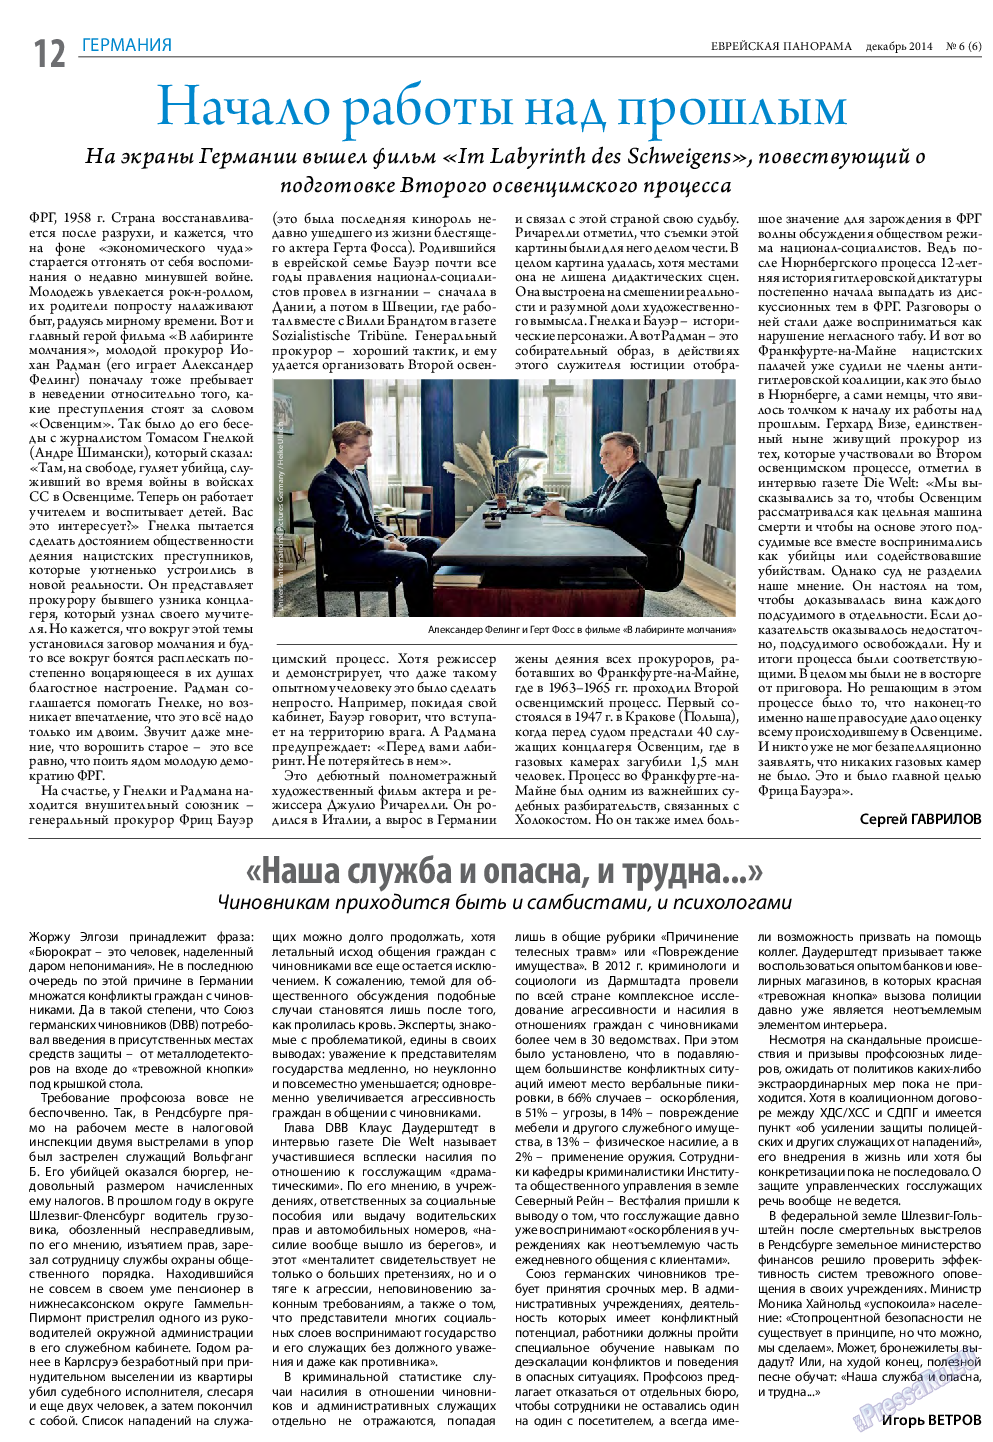 Еврейская панорама, газета. 2014 №6 стр.12